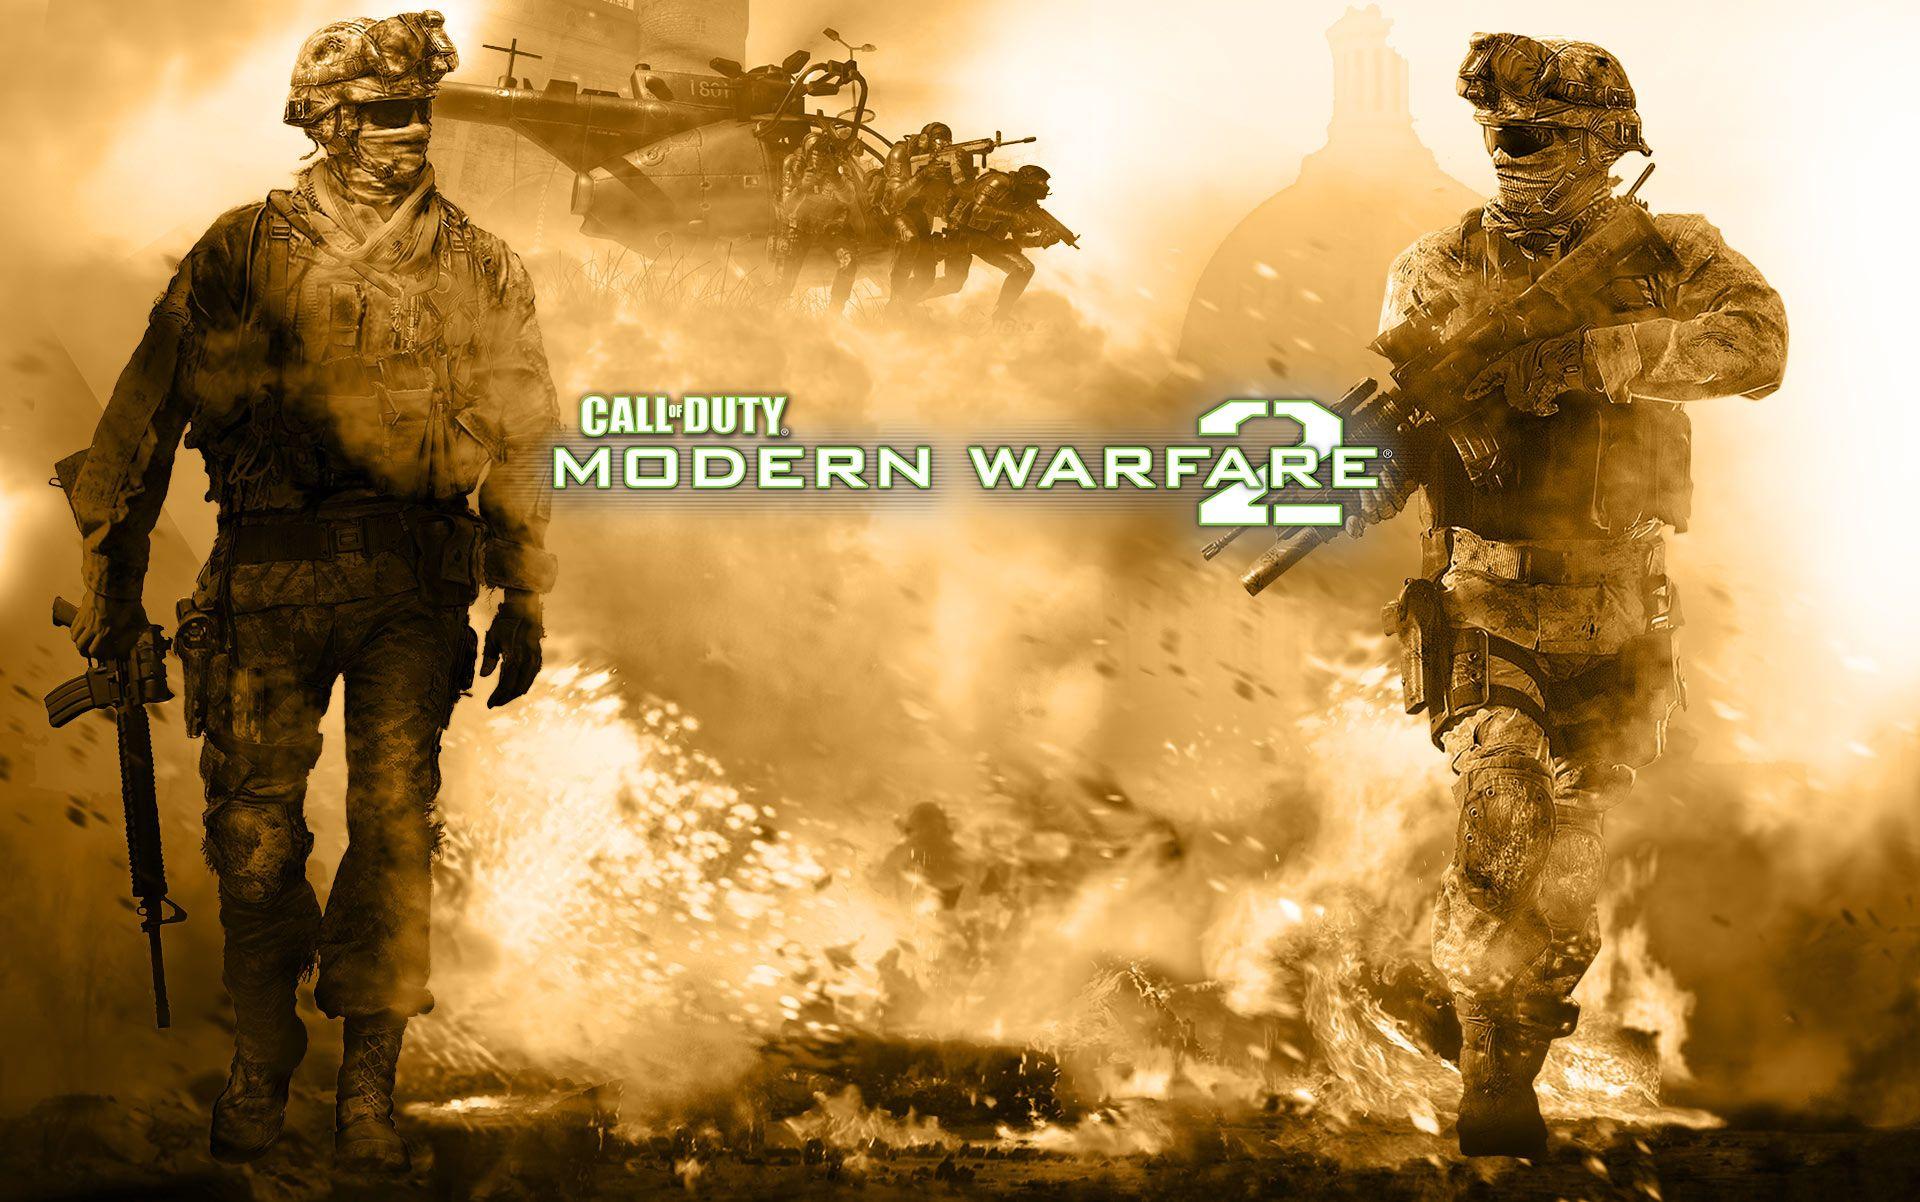 DHS- Call of Duty Modern Warfare 2. Die Hard